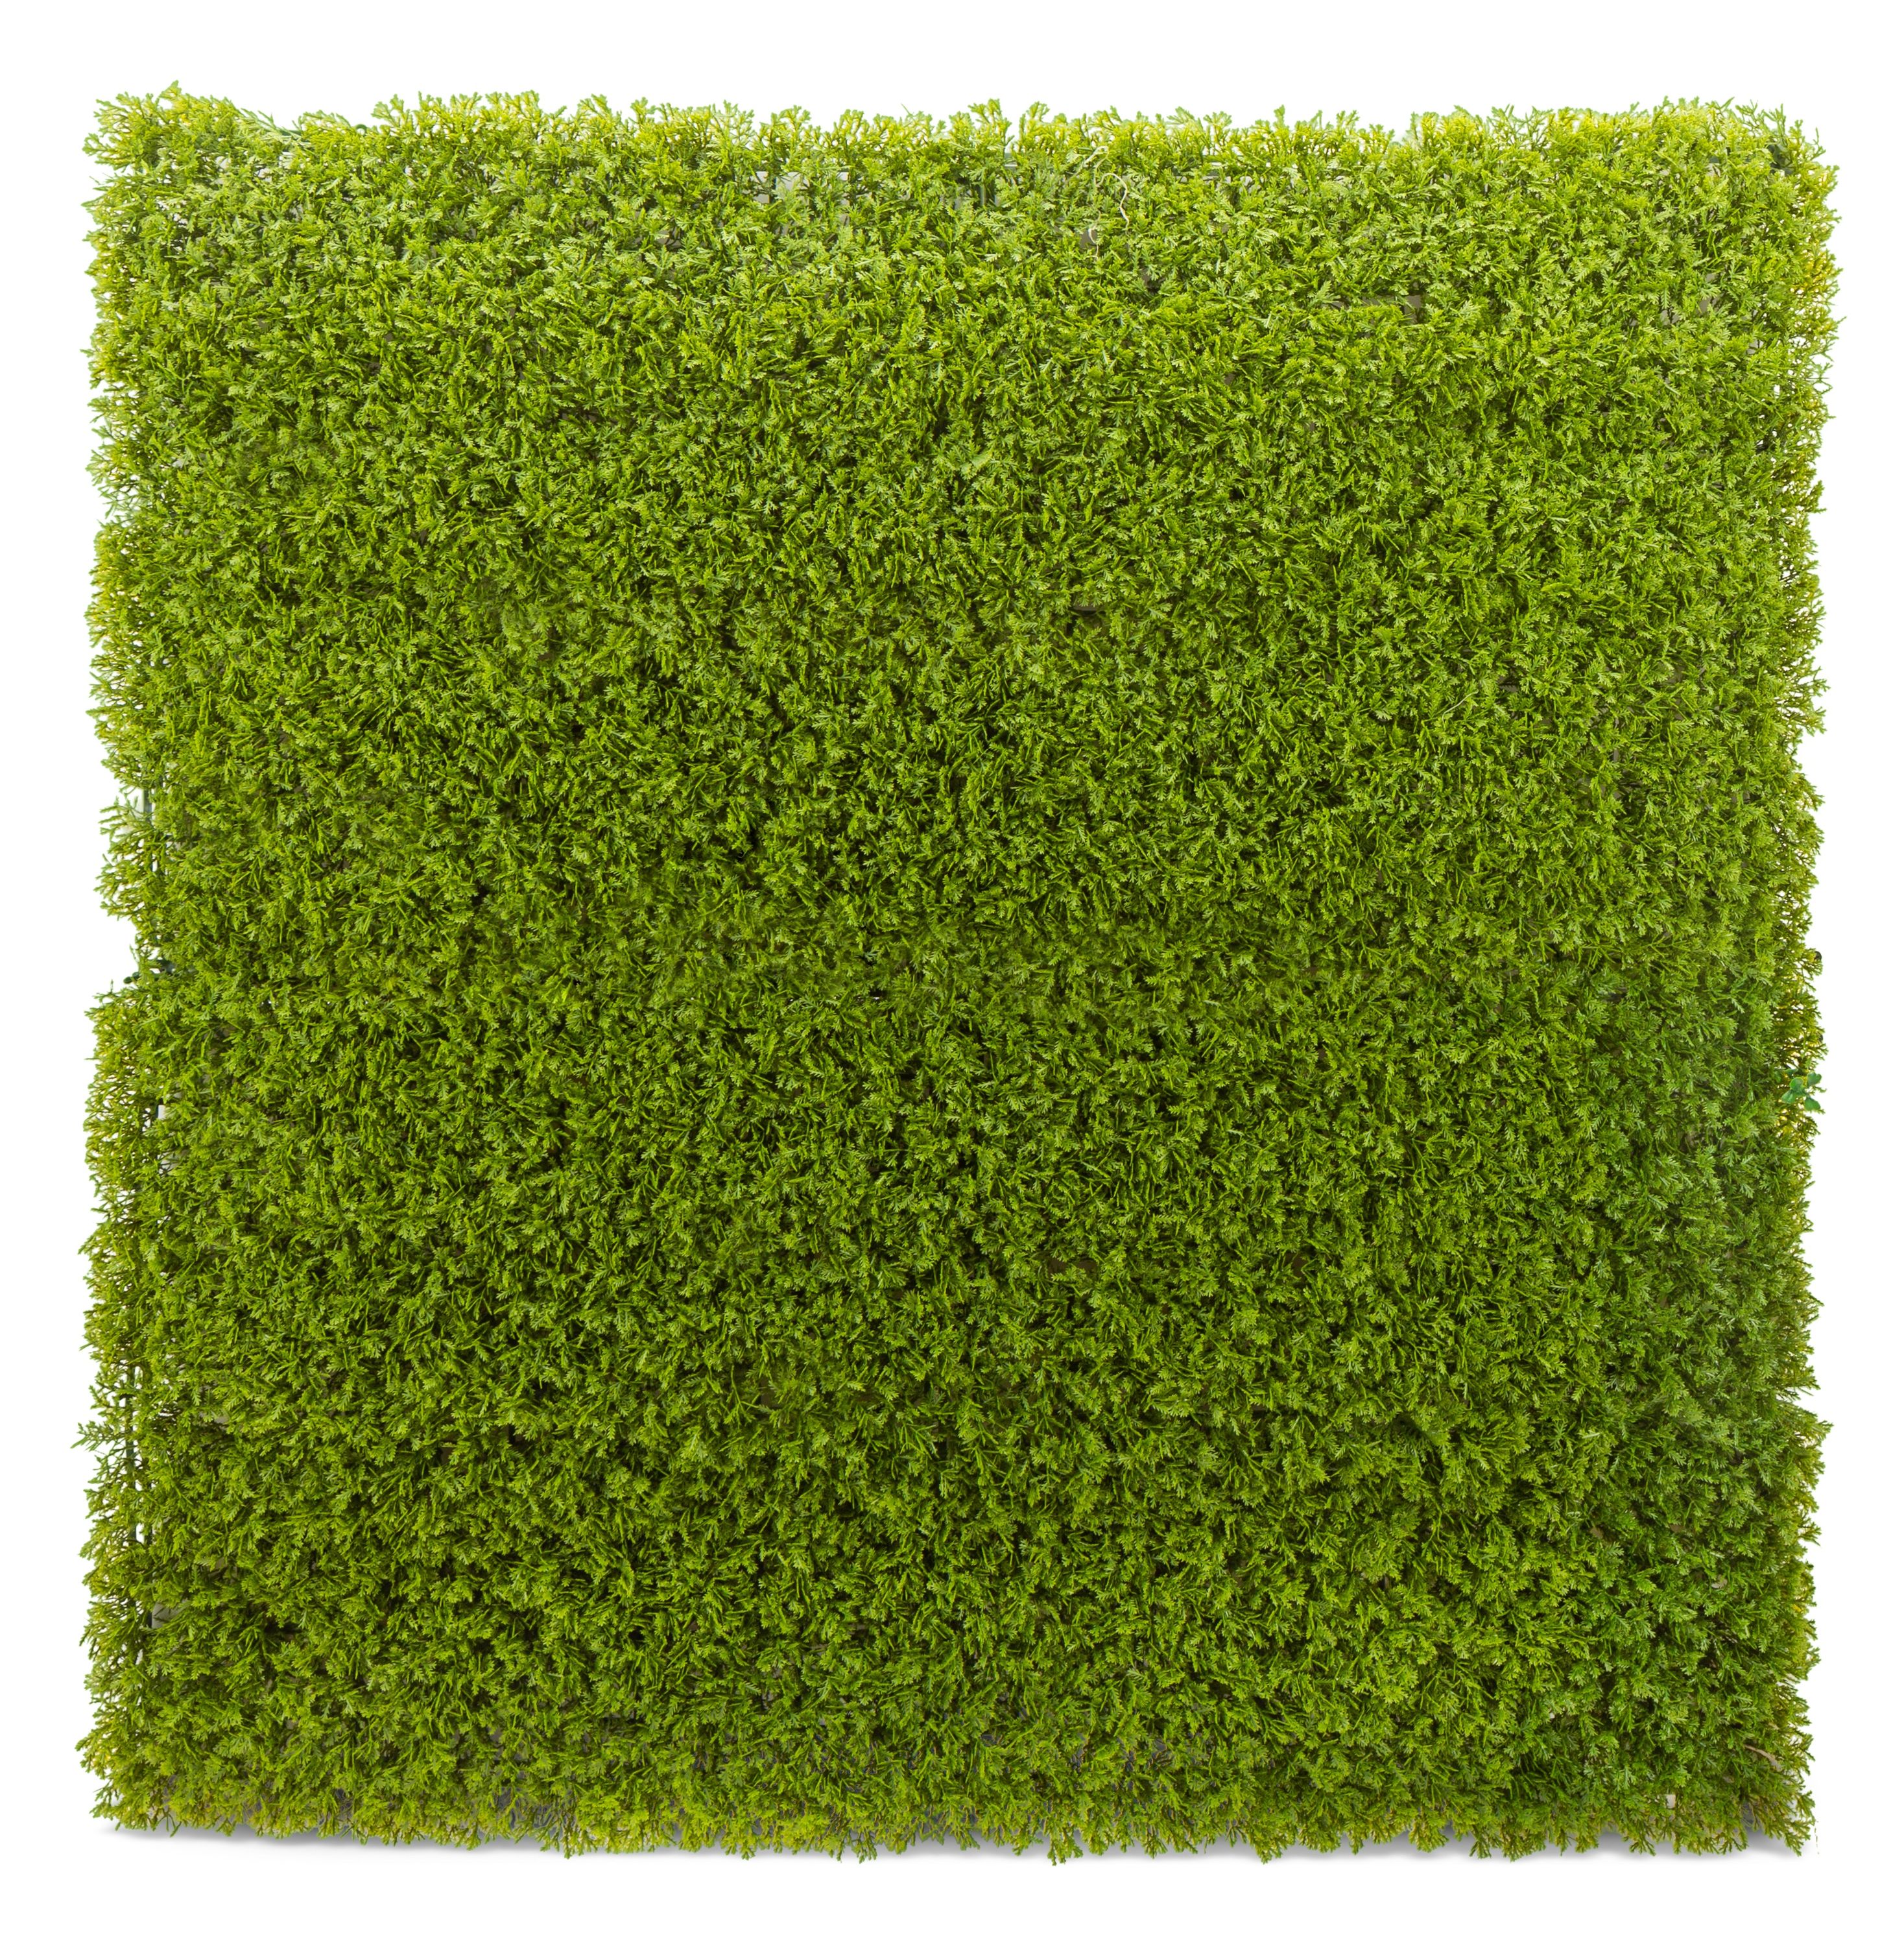 naturae decor 20-in W x 20-in H Green Leaf Garden Trellis (4-Pack) in ...